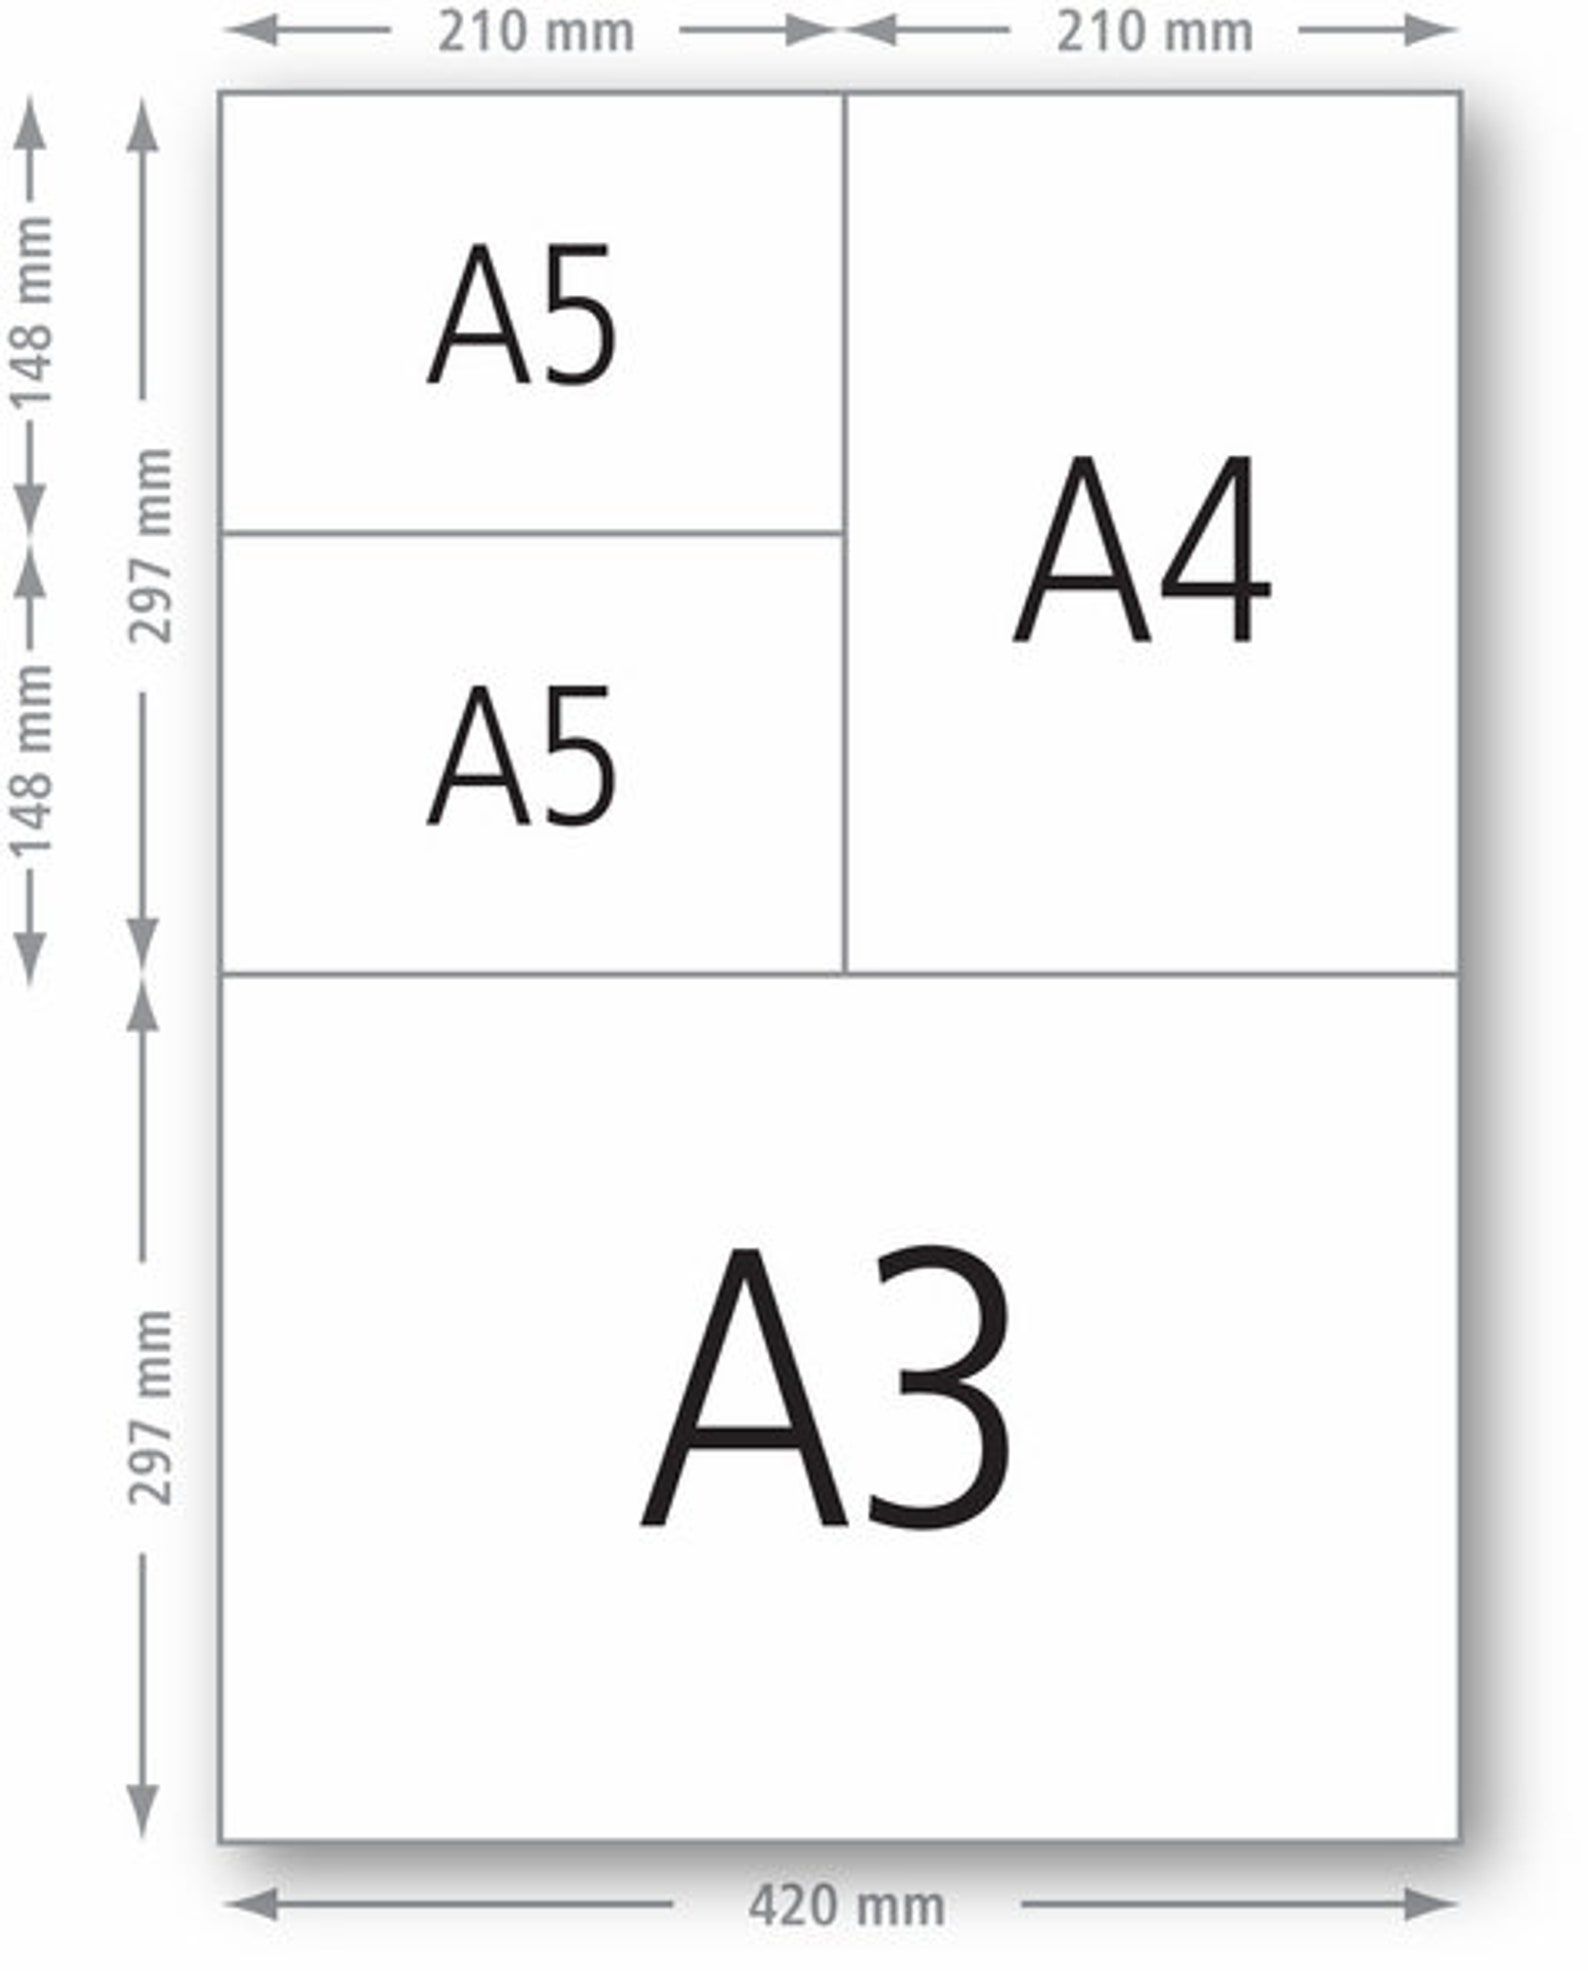 Лист бумаги какого формата крупнее. Лист а5. Формат а4 и а5. Формат листа а5. Формат листа а4.